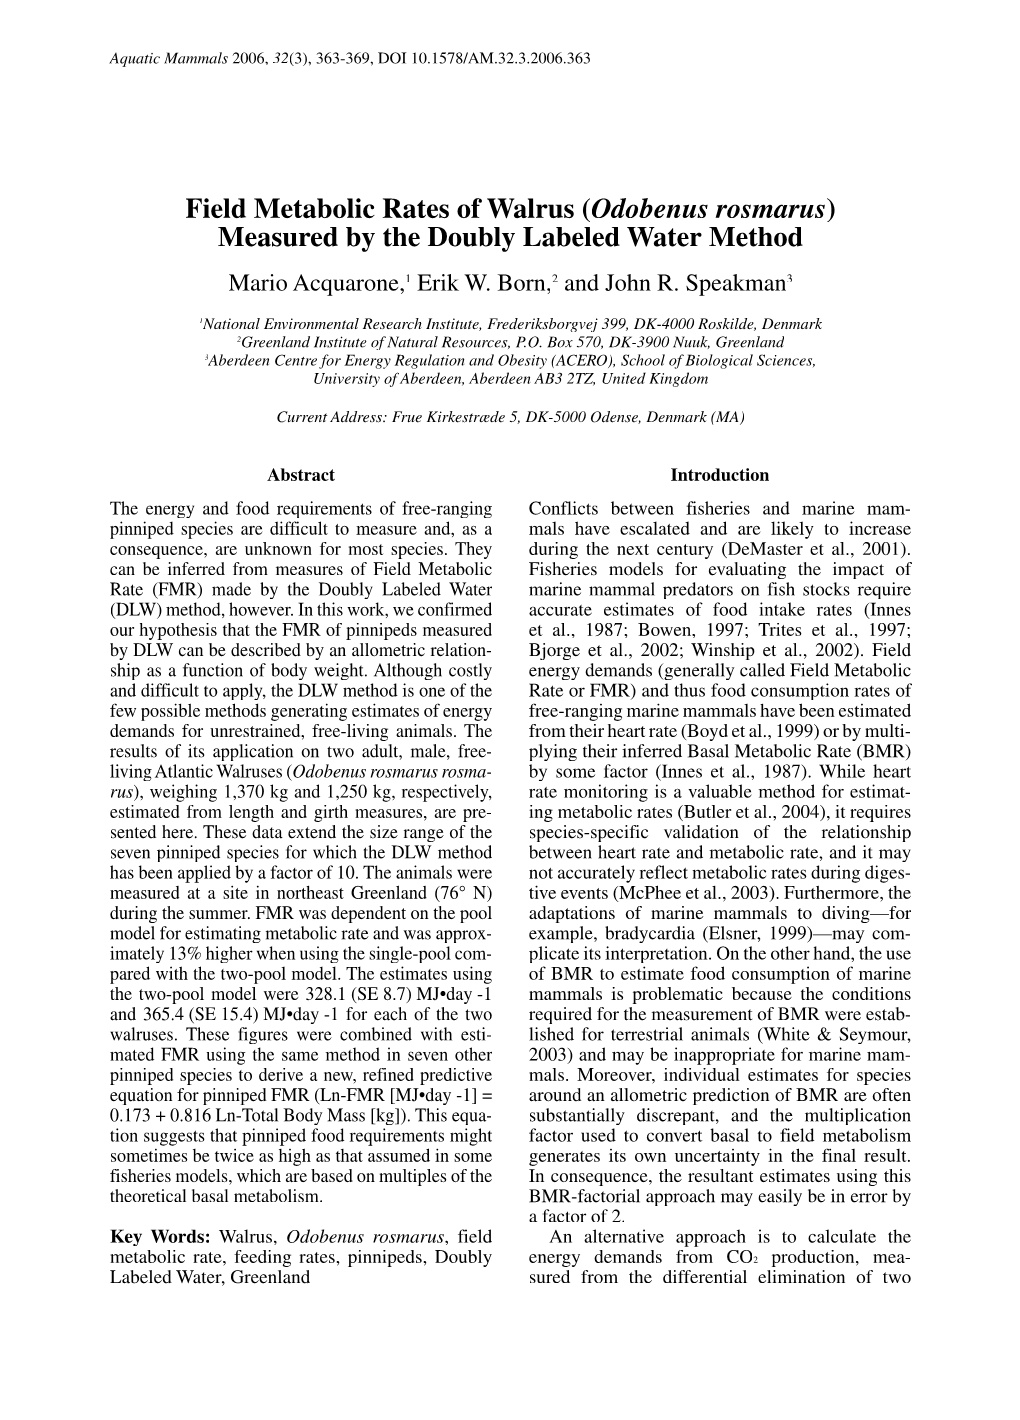 Field Metabolic Rates of Walrus (Odobenus Rosmarus) Measured by the Doubly Labeled Water Method Mario Acquarone,1 Erik W